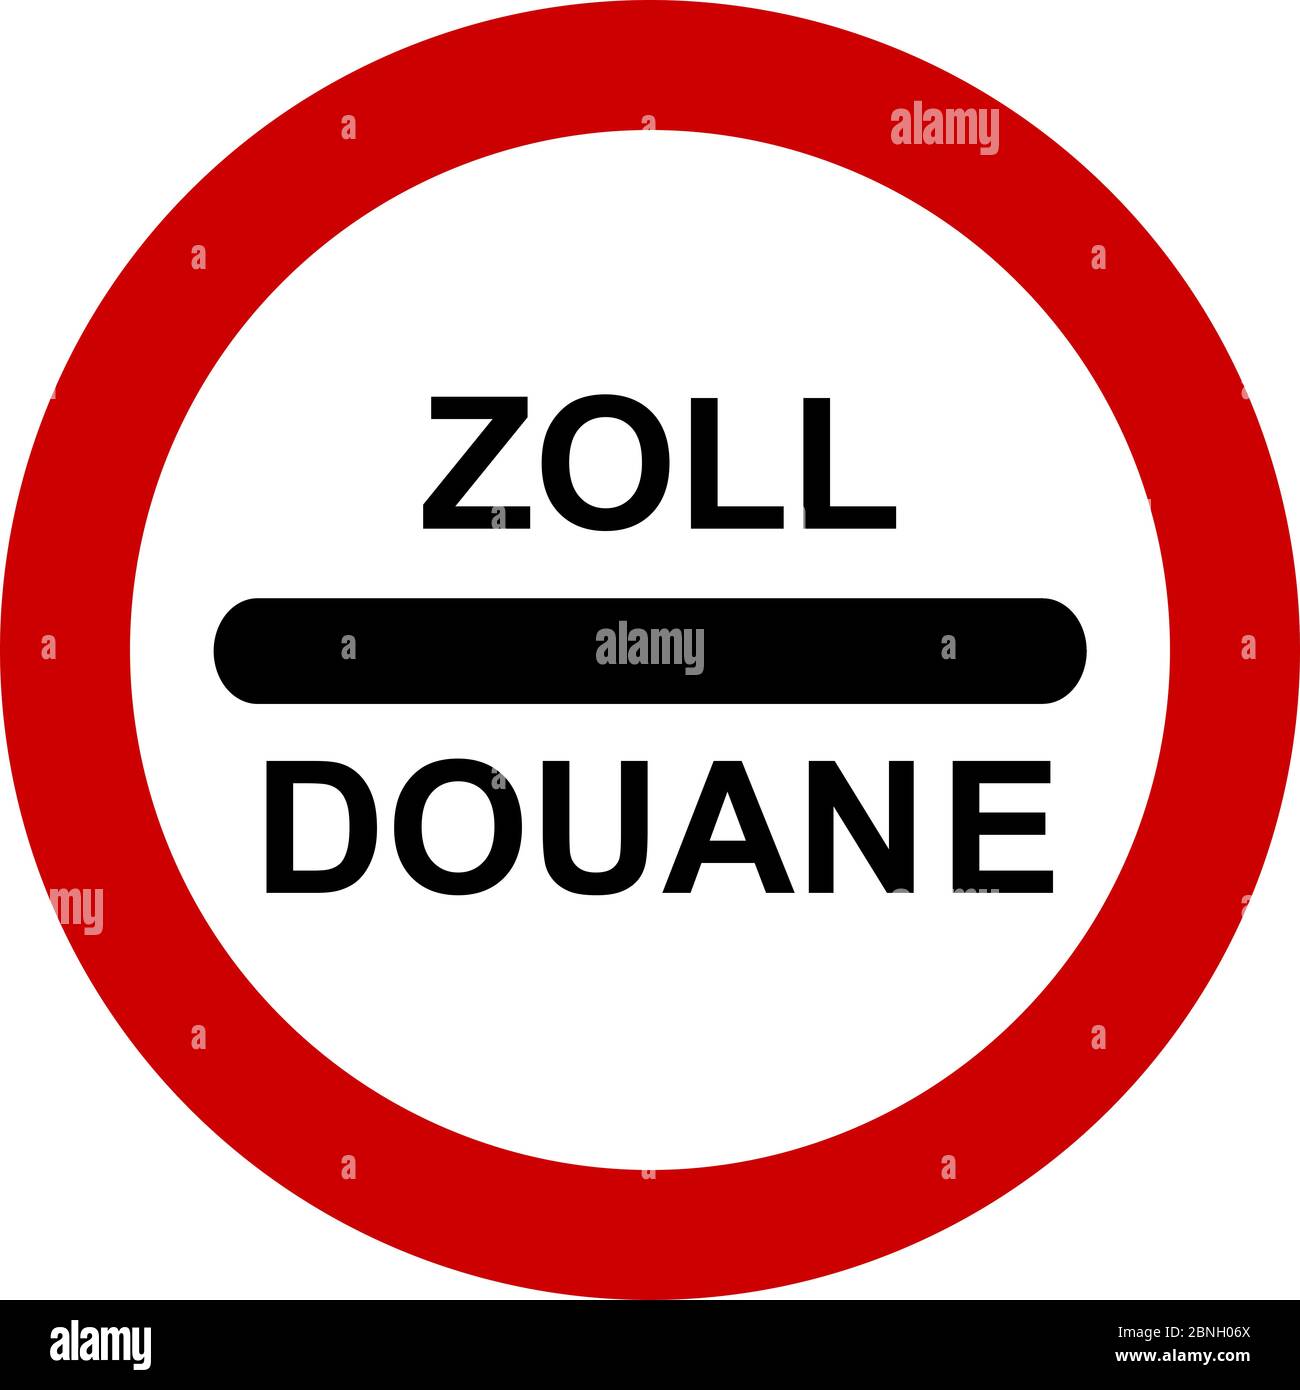 Zoll Douane road sign, EU customs sign Stock Photo